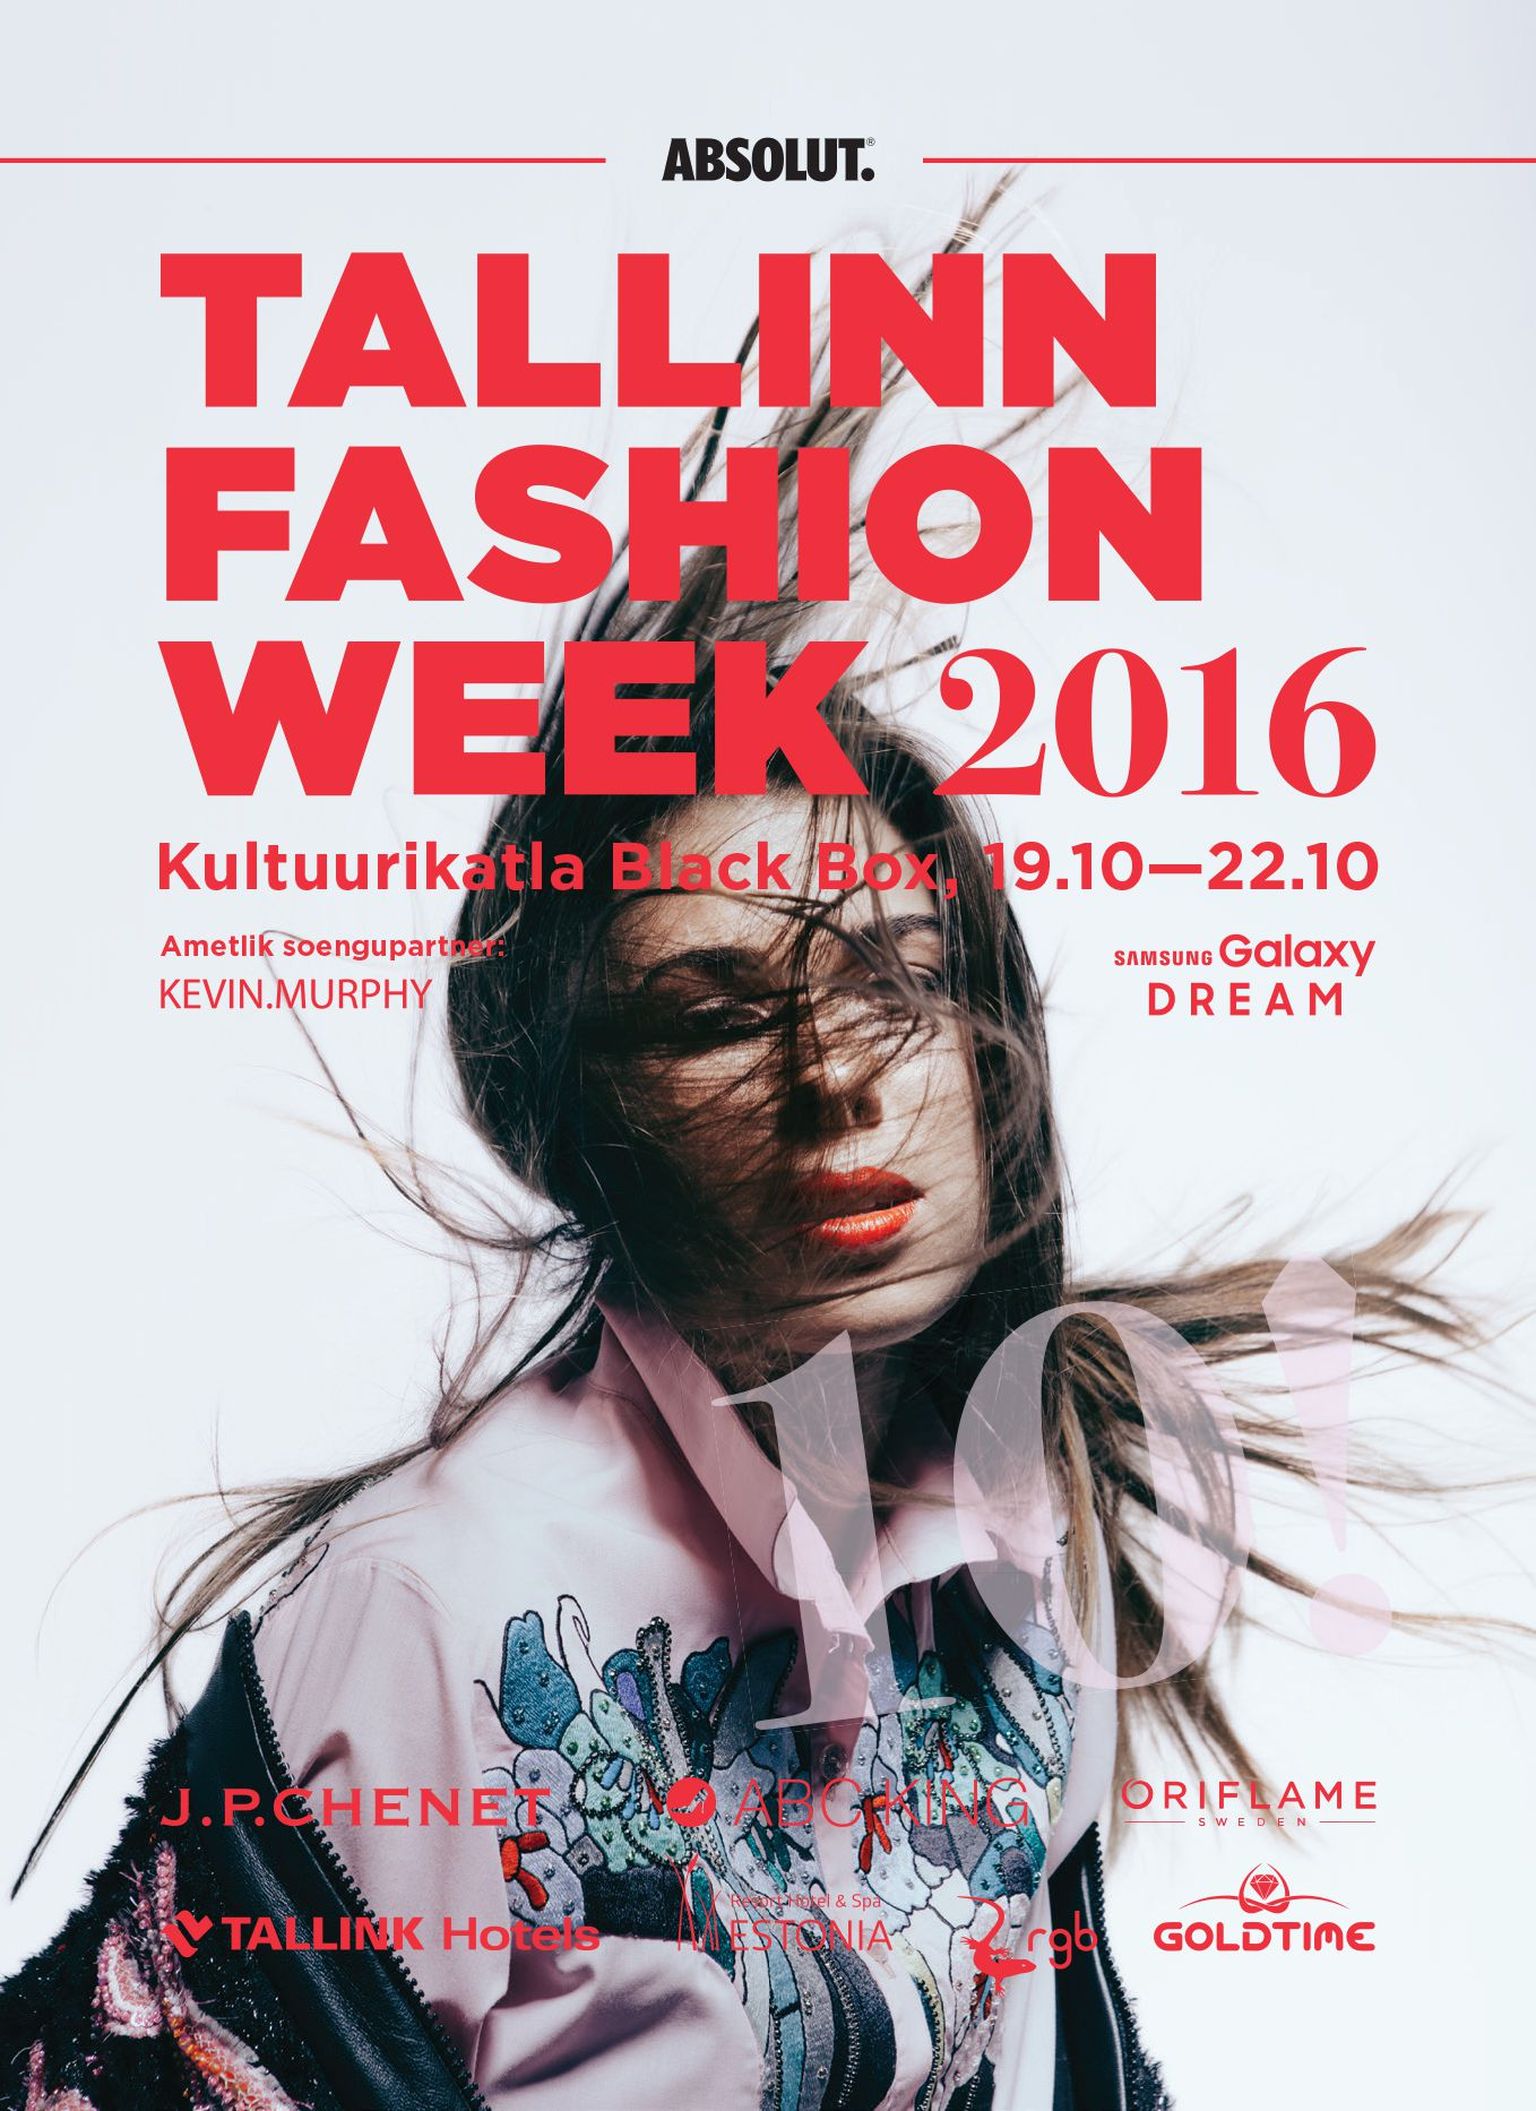 Tallinn Fashion Week 2016